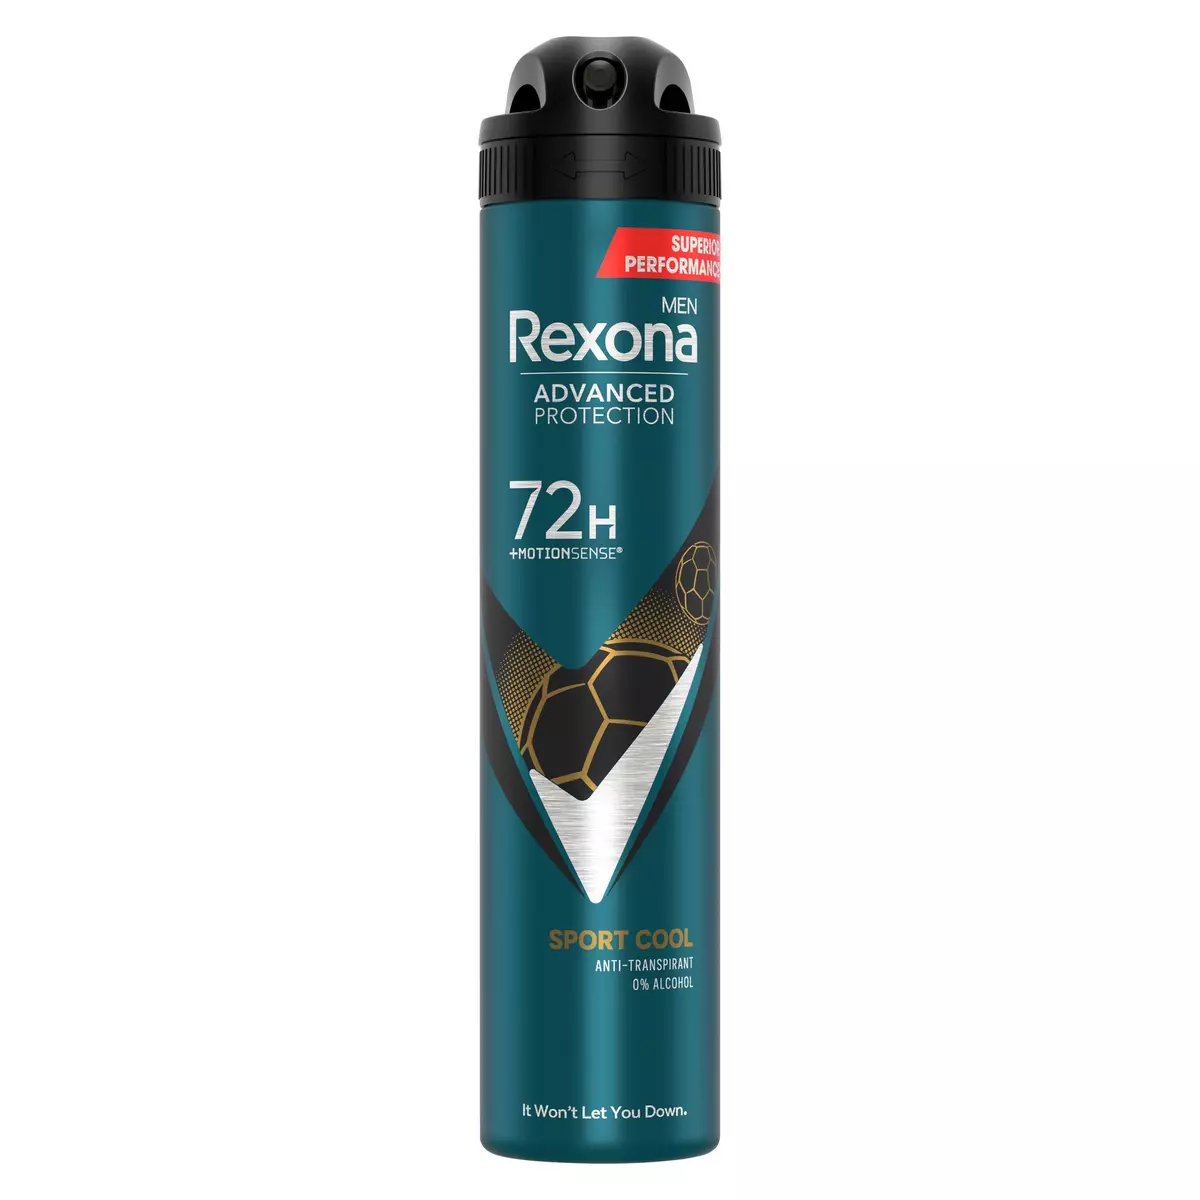 REXONA MEN Déodorant spray advanced protection 72h homme sport cool 200ml